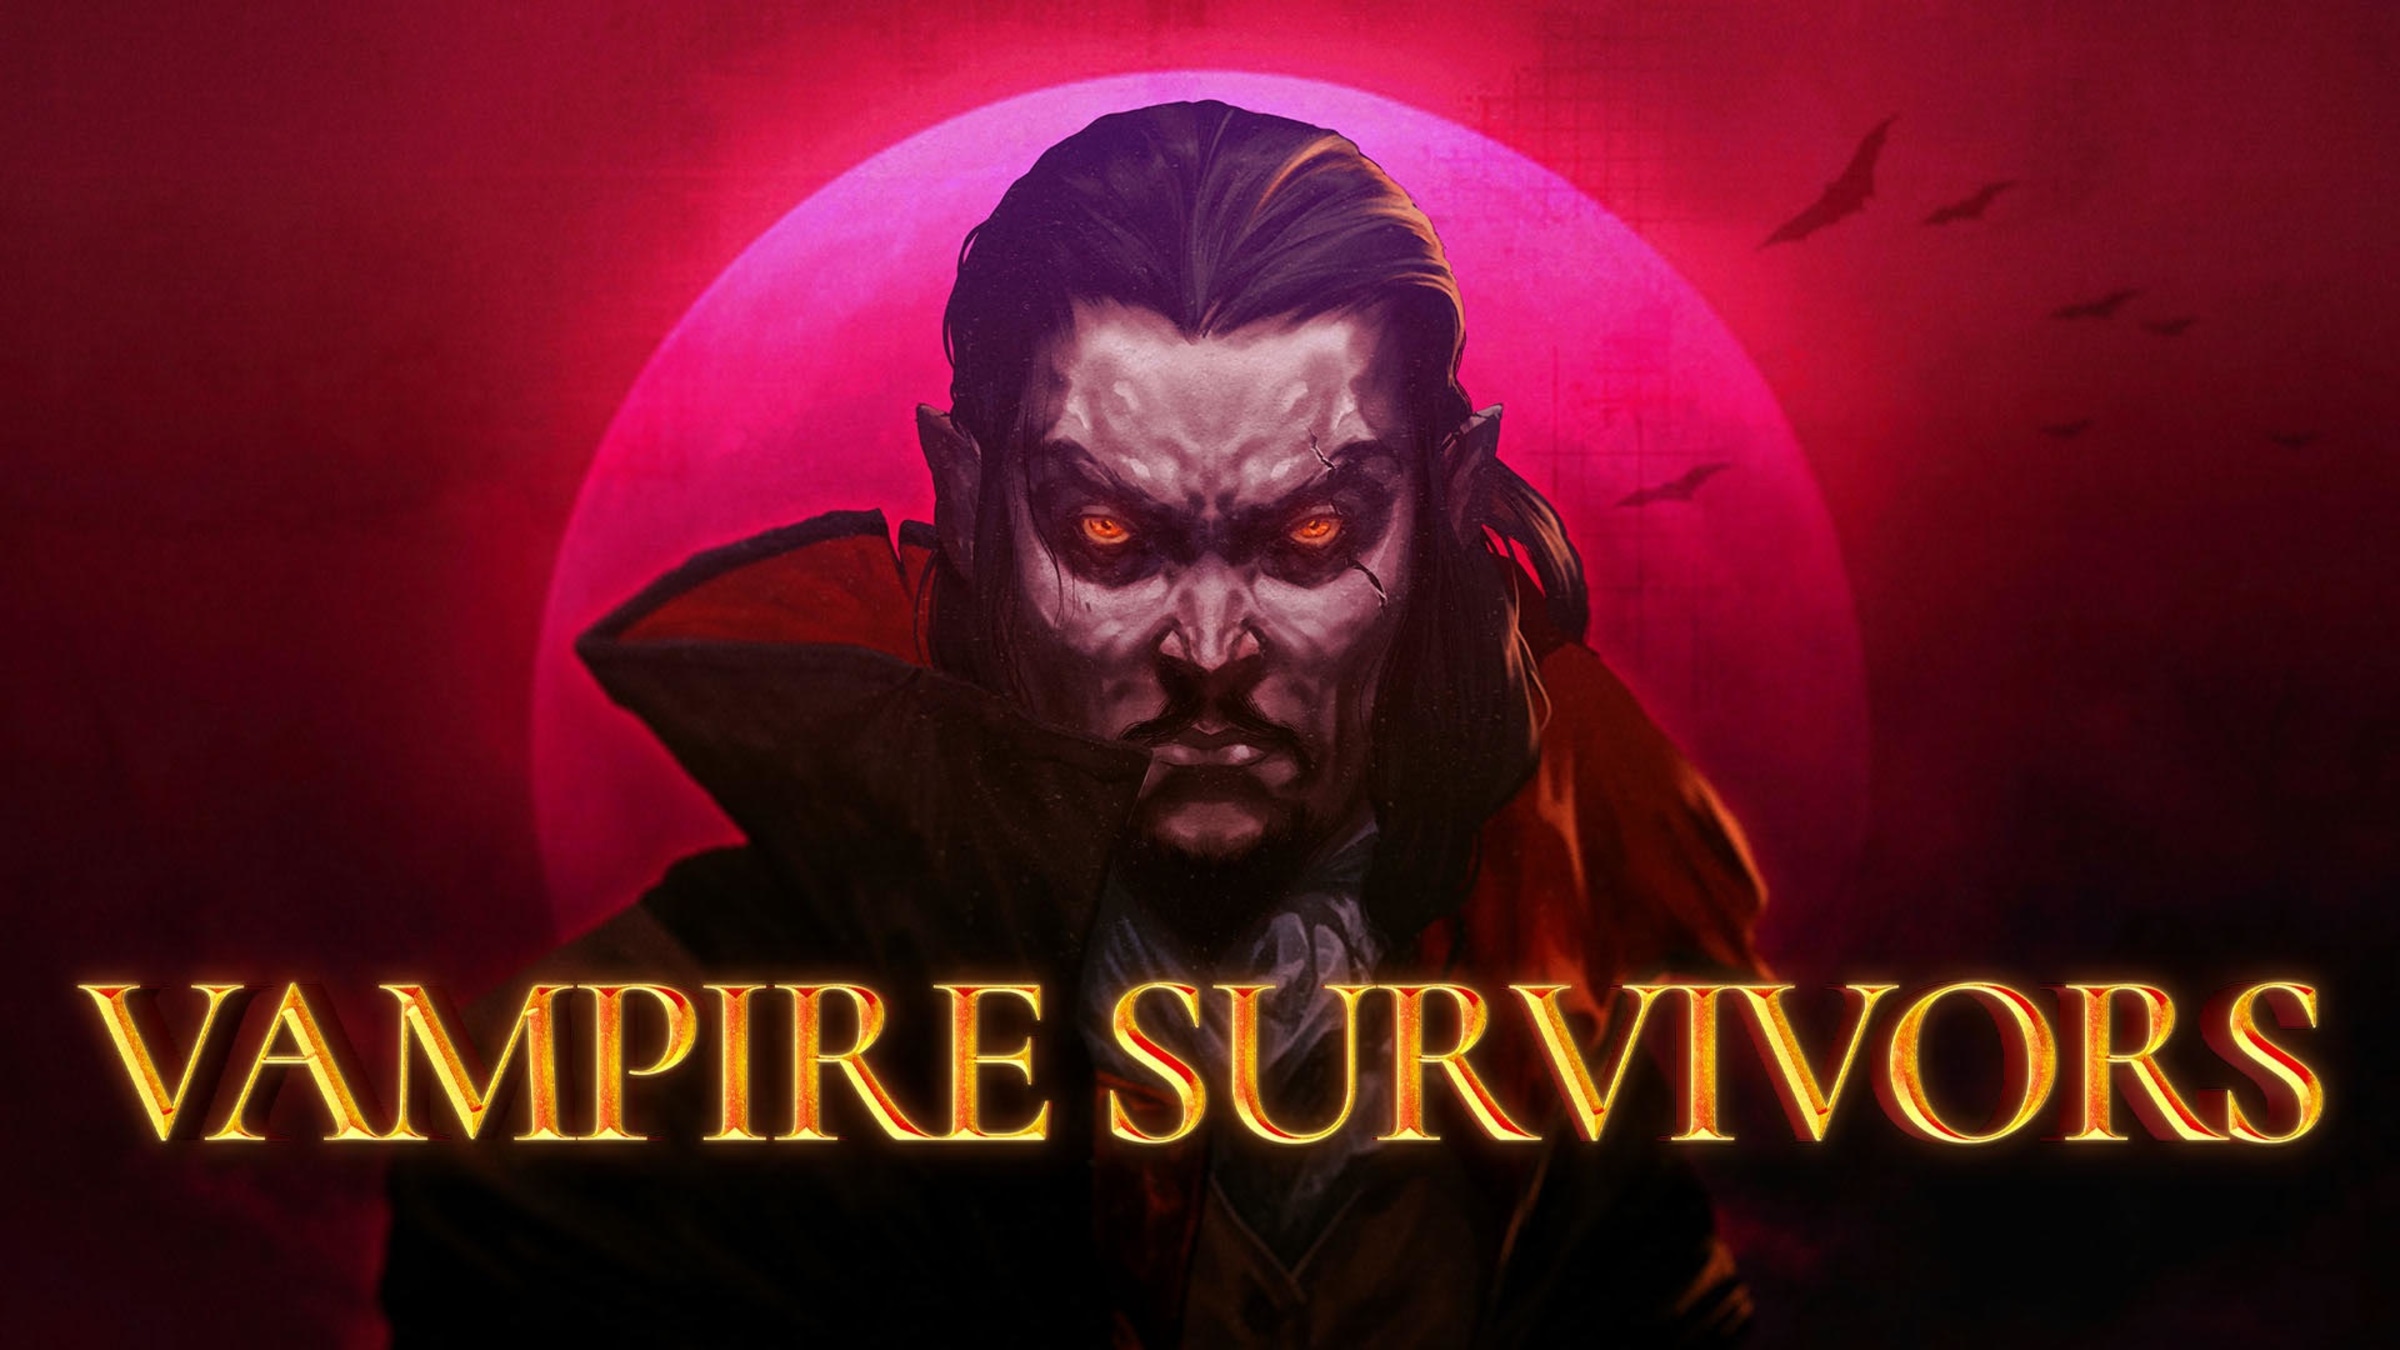 Vampire Survivors: Tides of the Foscari for Nintendo Switch - Nintendo  Official Site